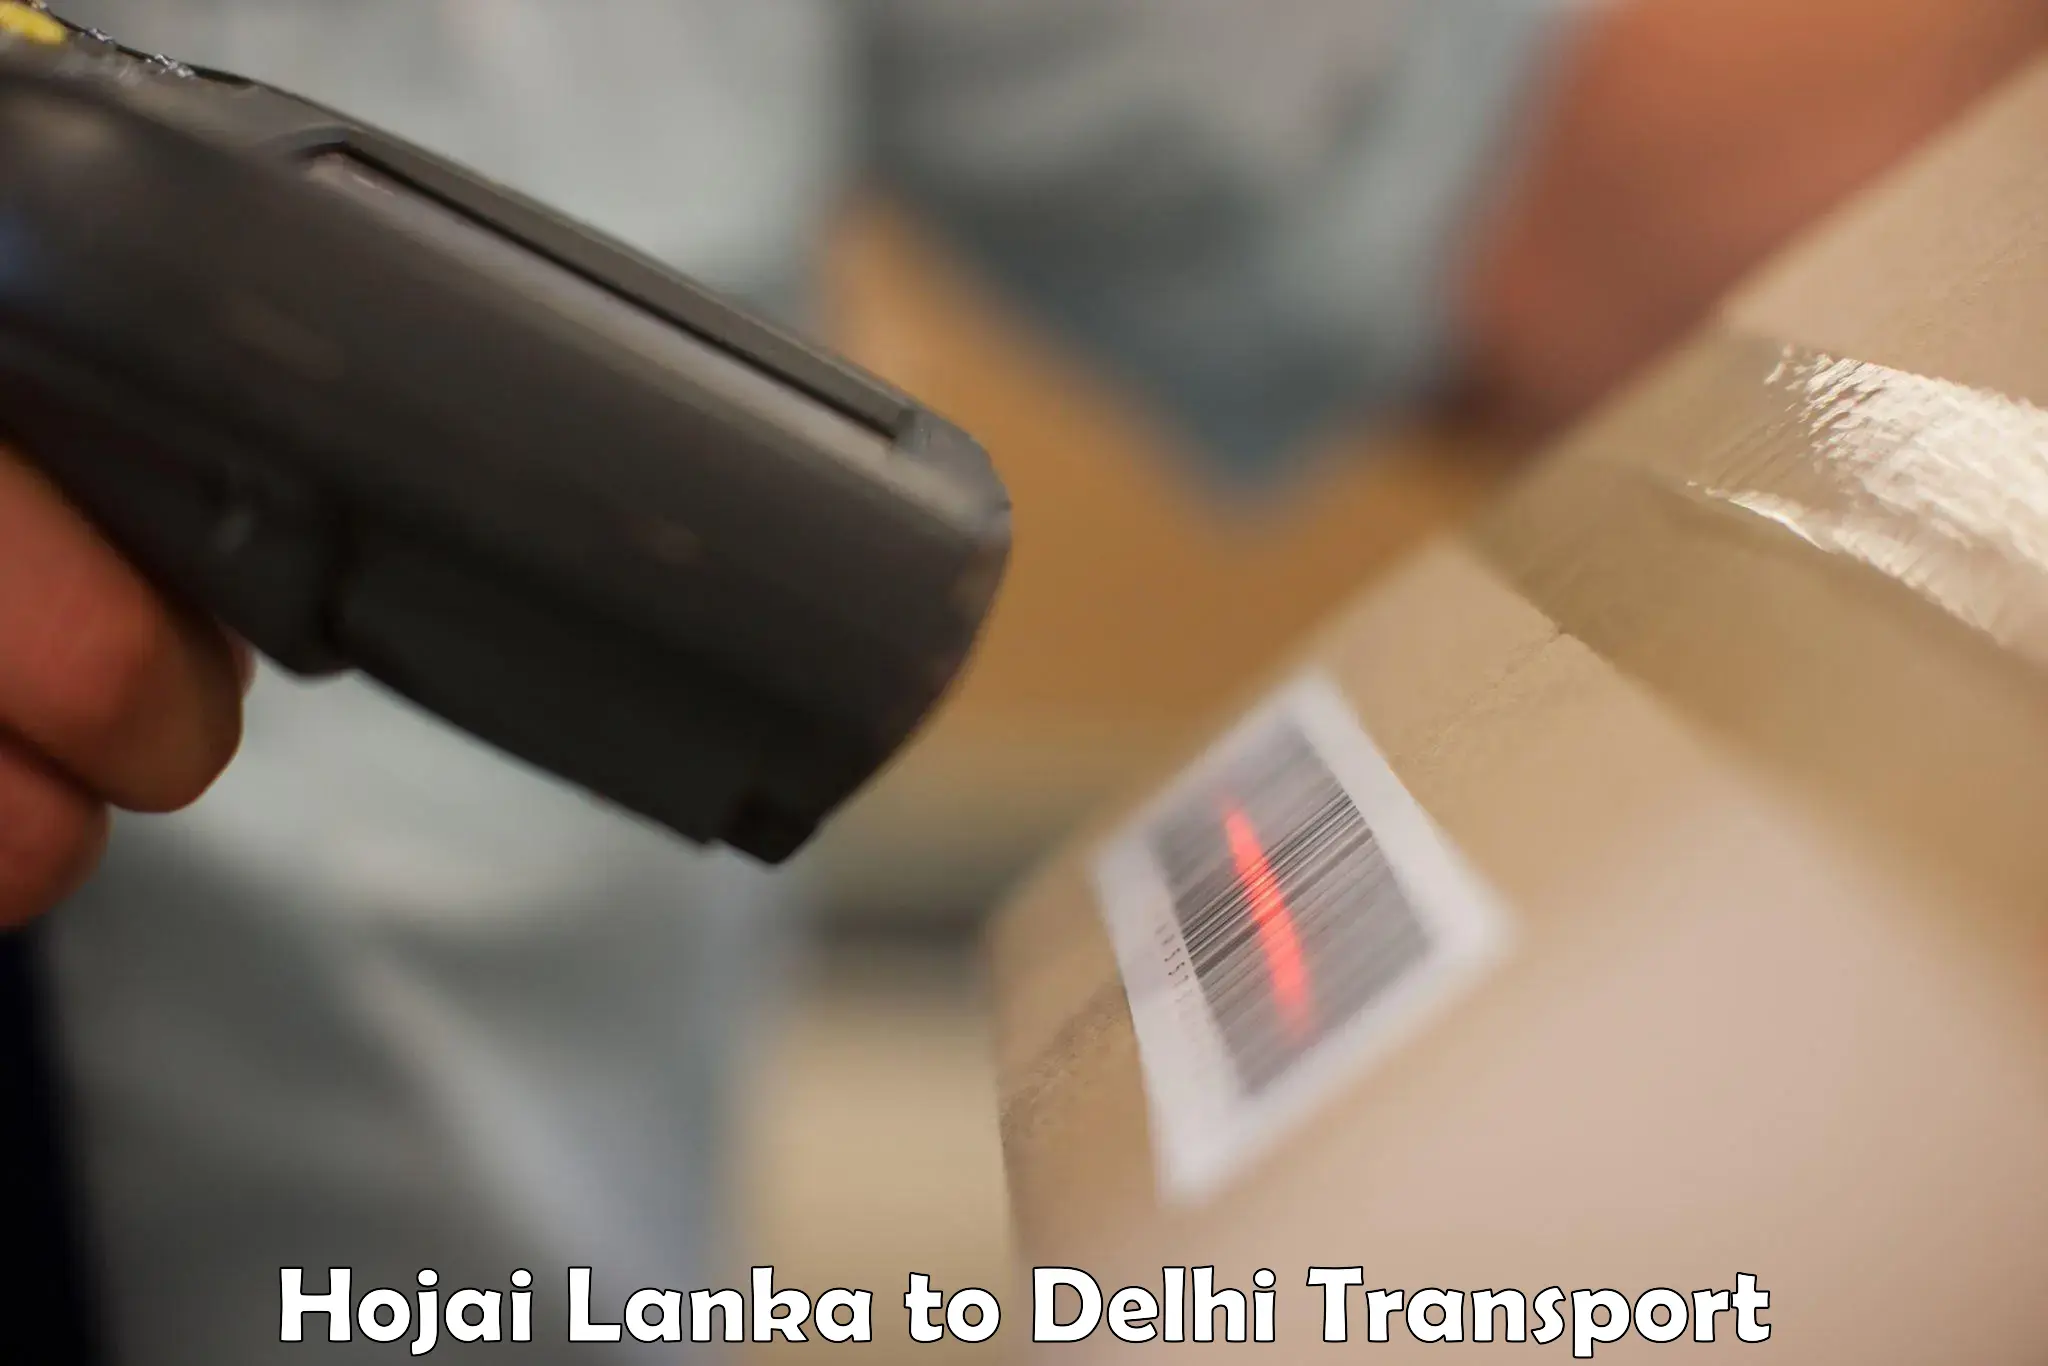 Air cargo transport services Hojai Lanka to Delhi